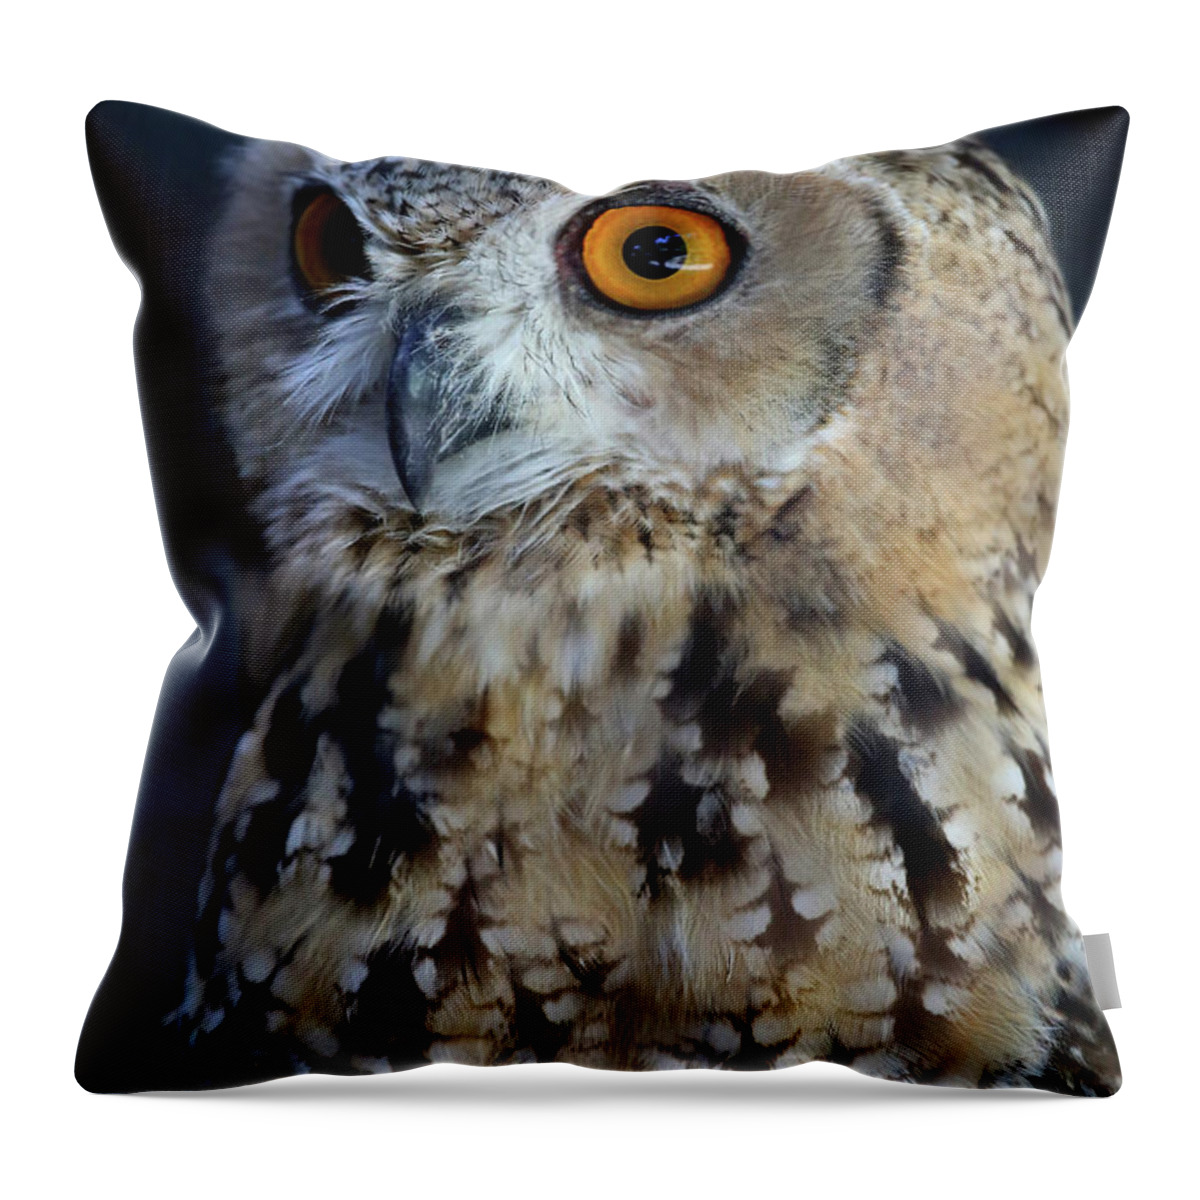 Owl Throw Pillow featuring the photograph Alert by Steve Parr